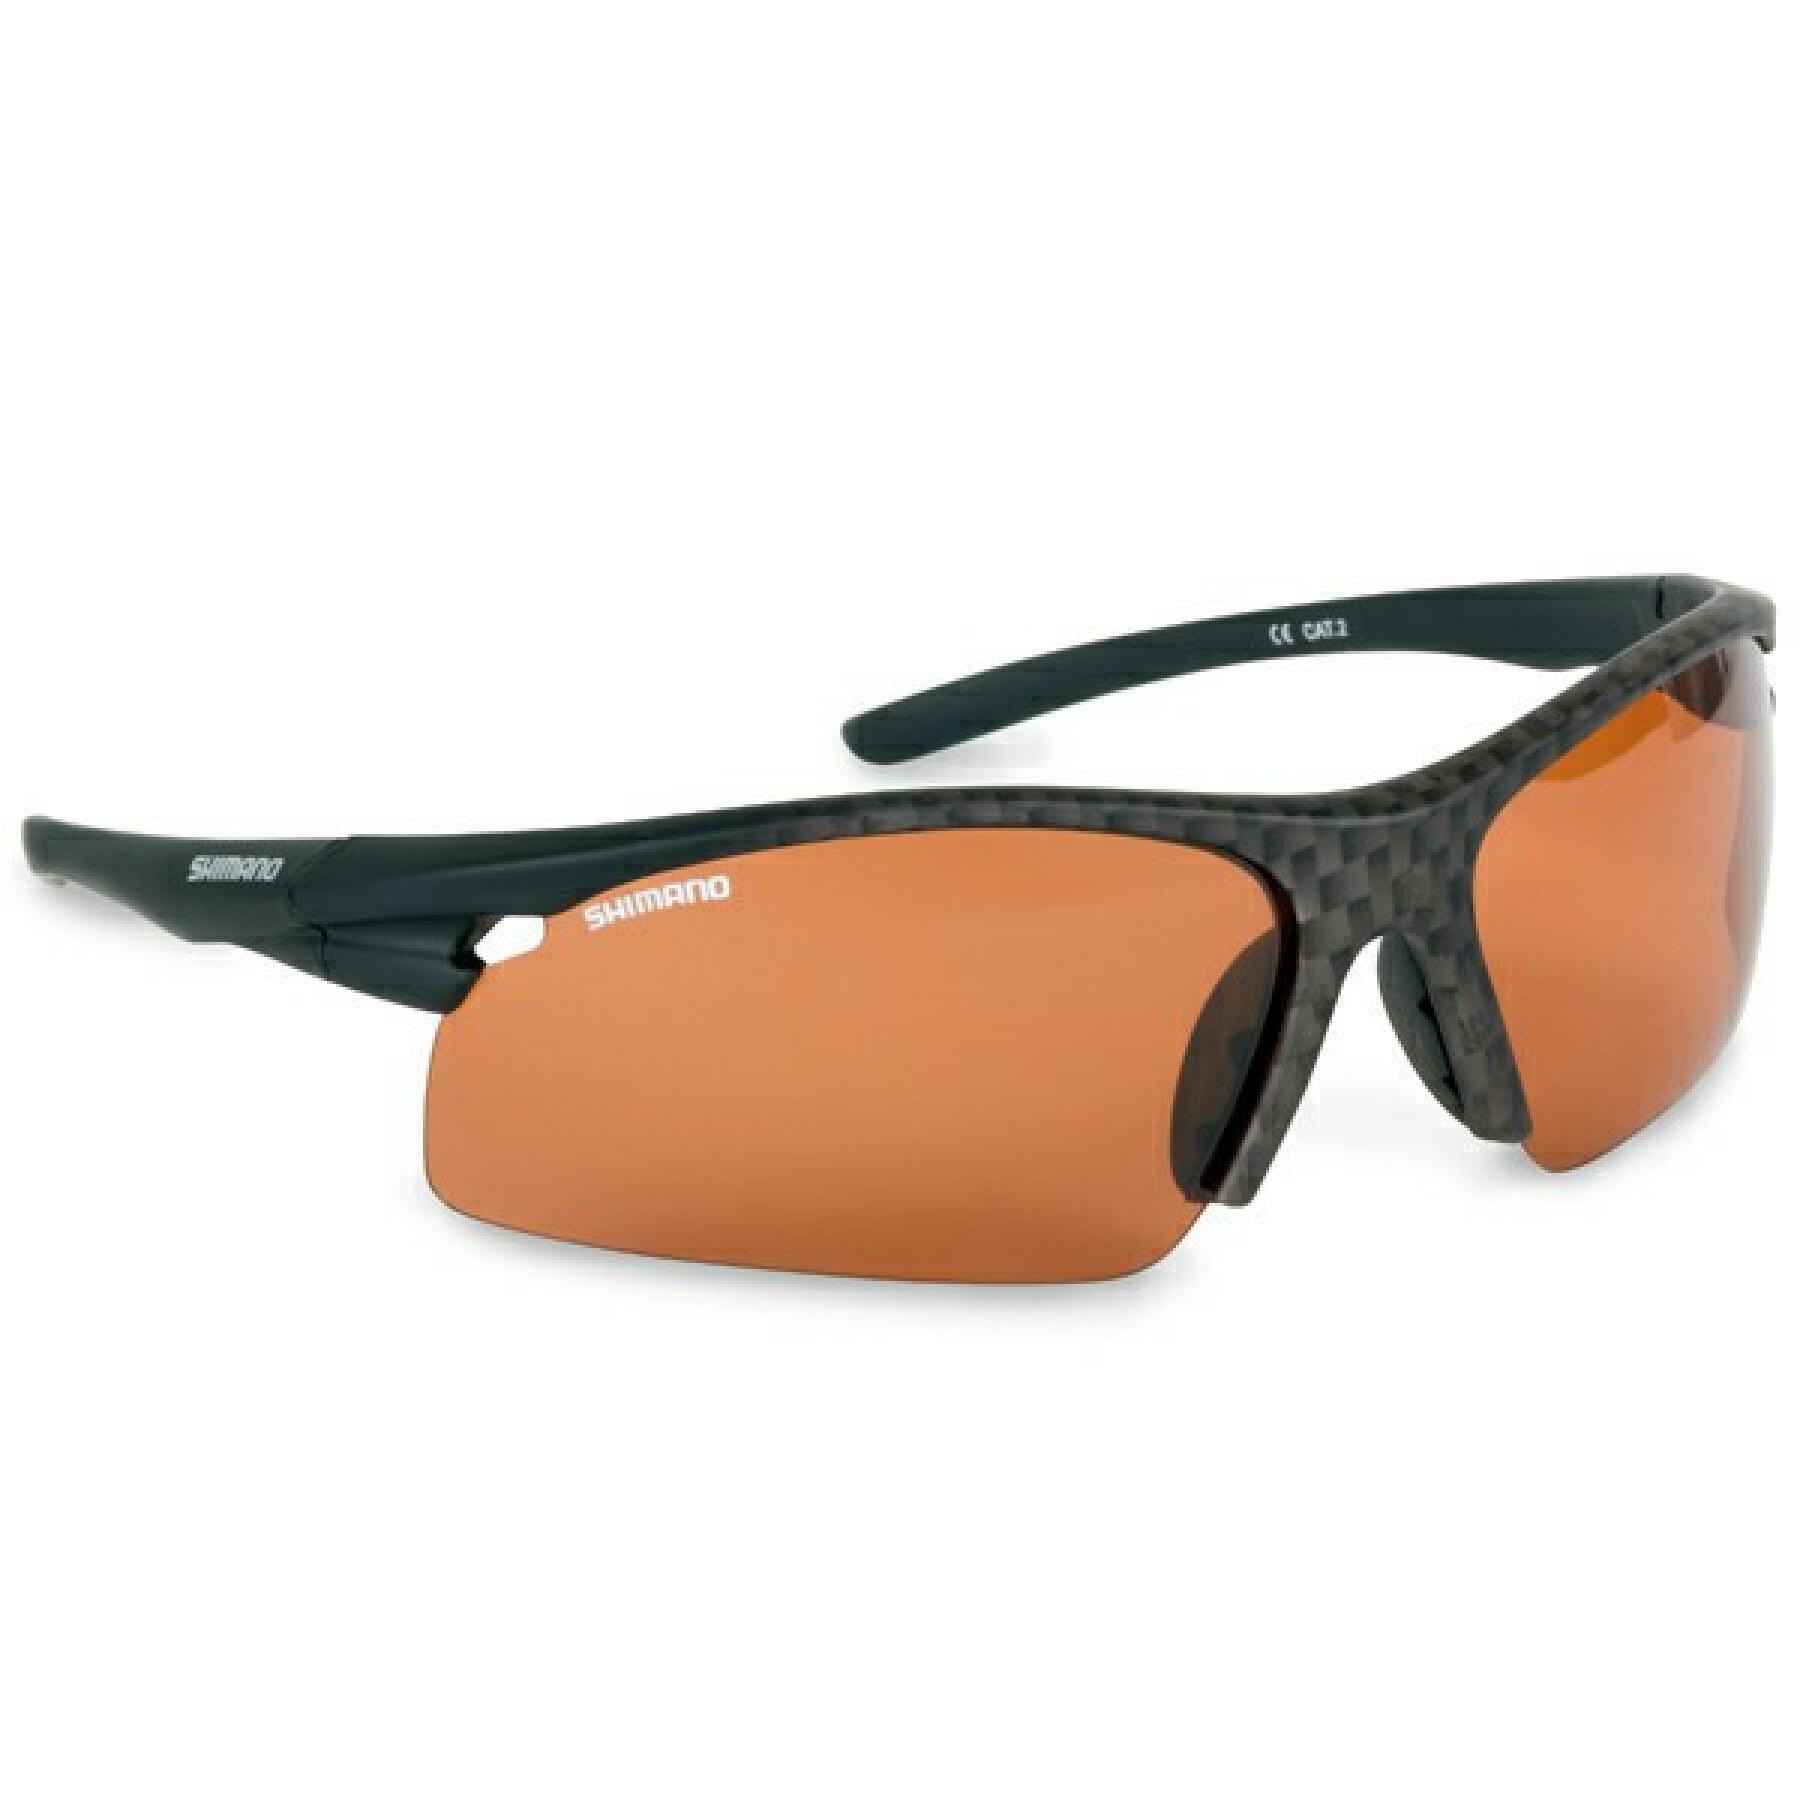 Sunglasses Shimano Fireblood